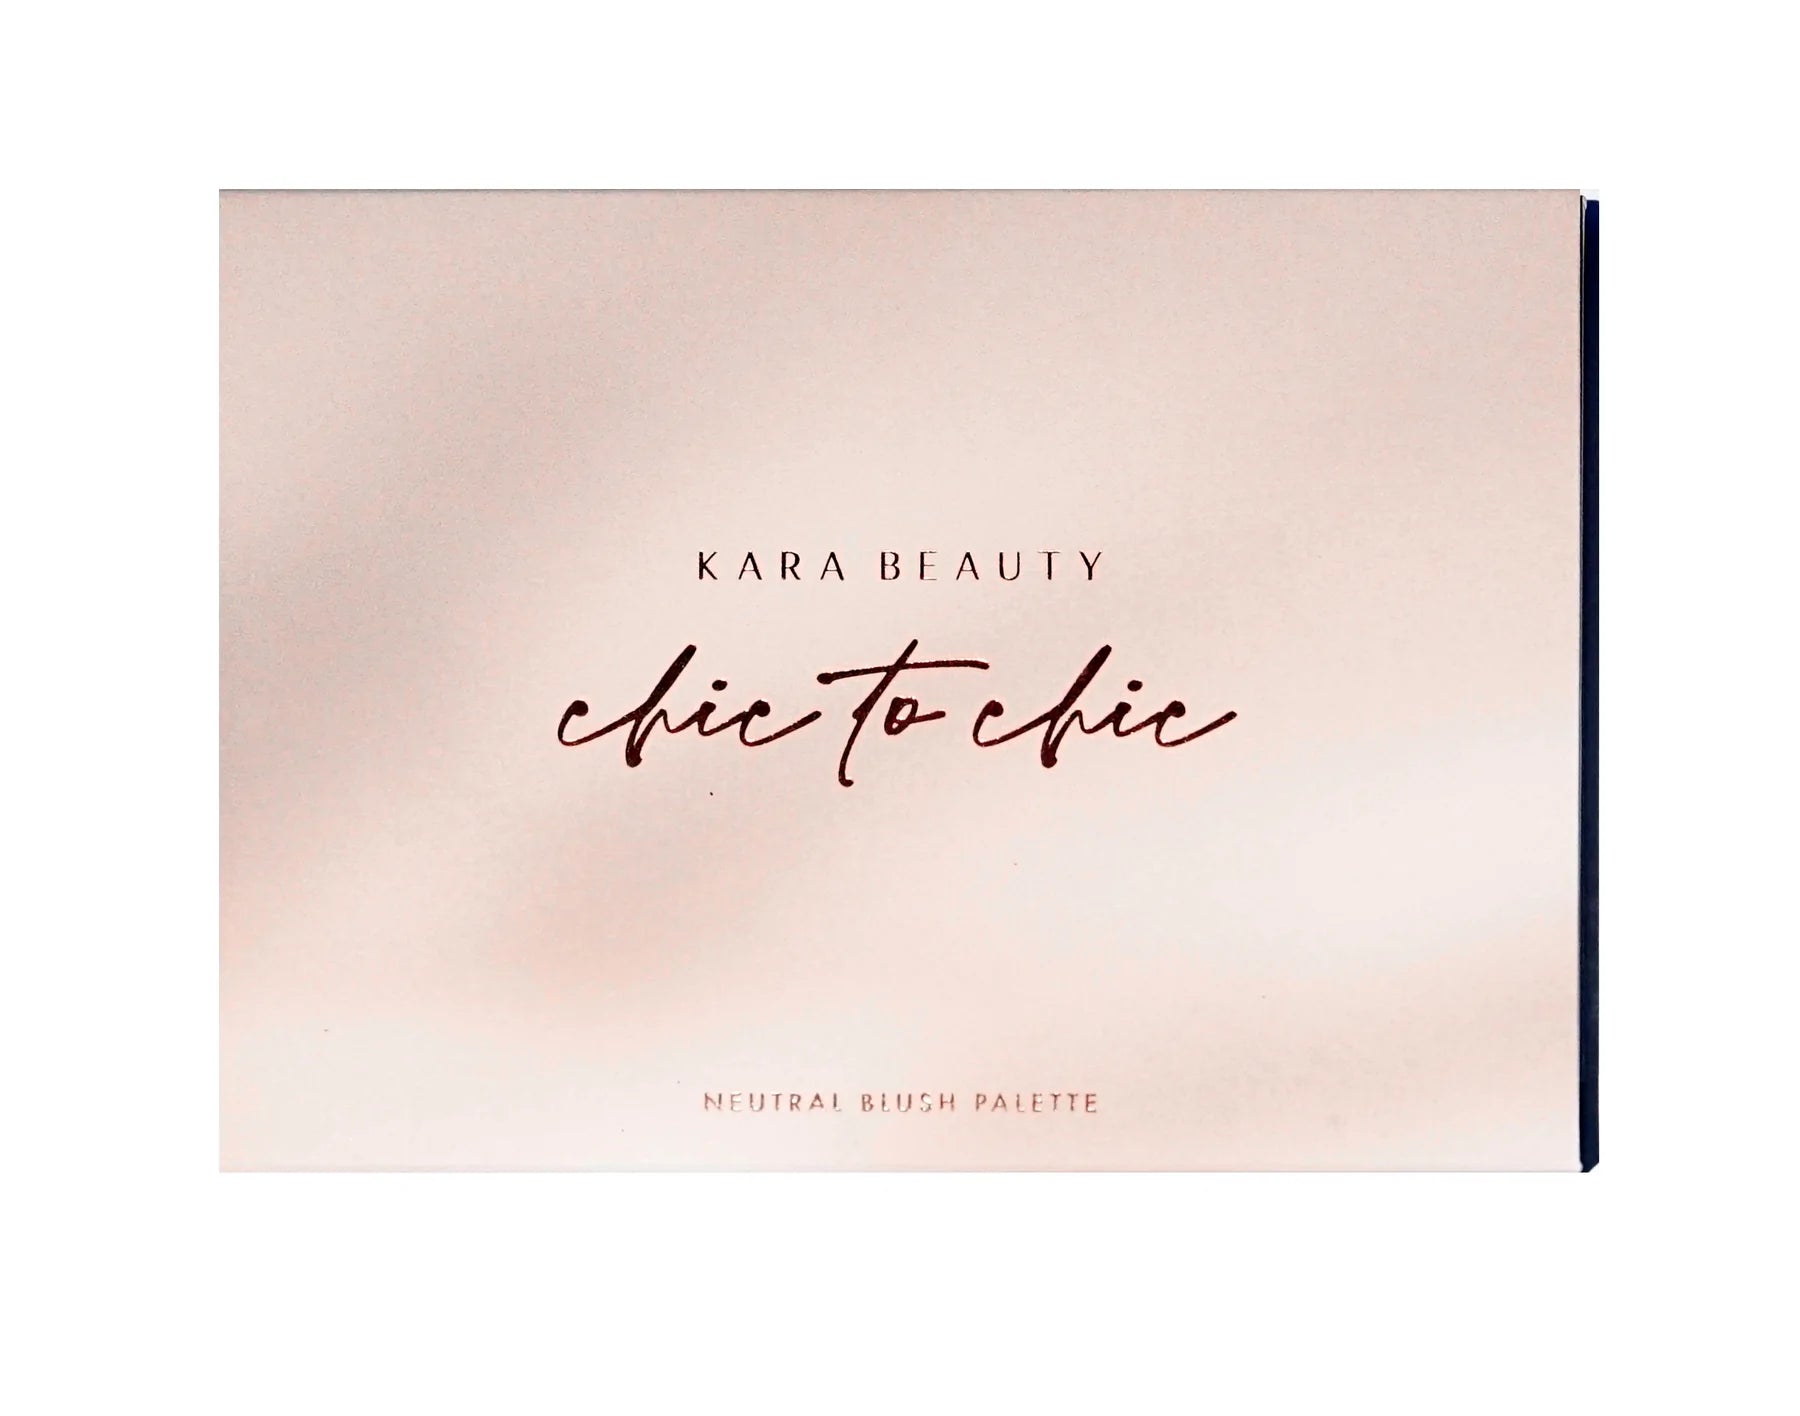 Kara Beauty - Chic To Chic Neutral Blush Palette